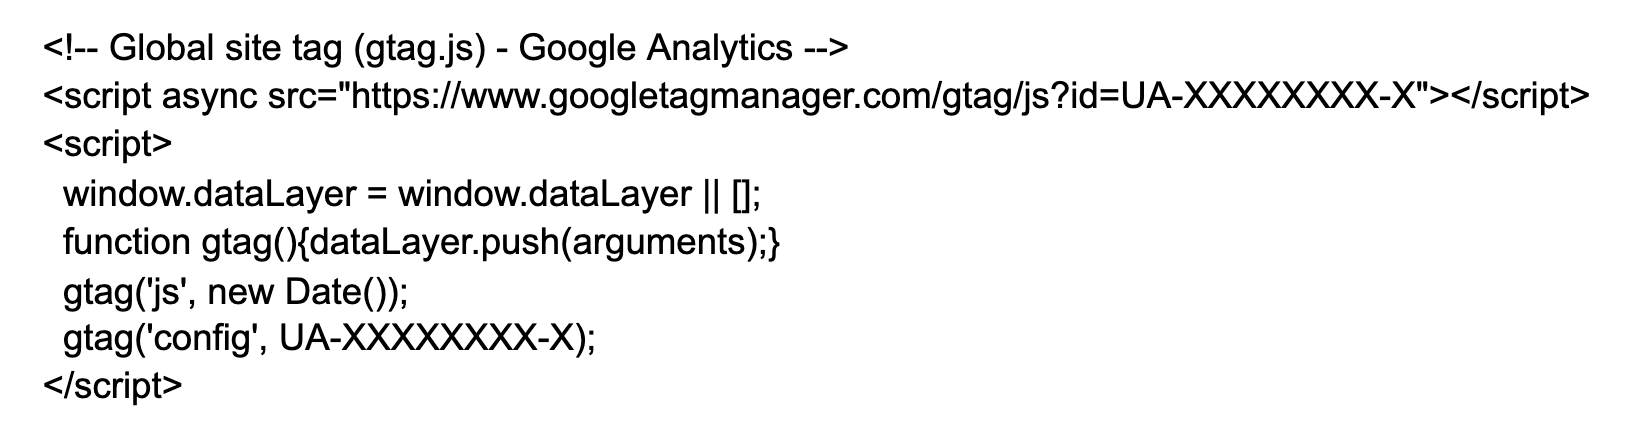 Google Analytics Code (gtag version)